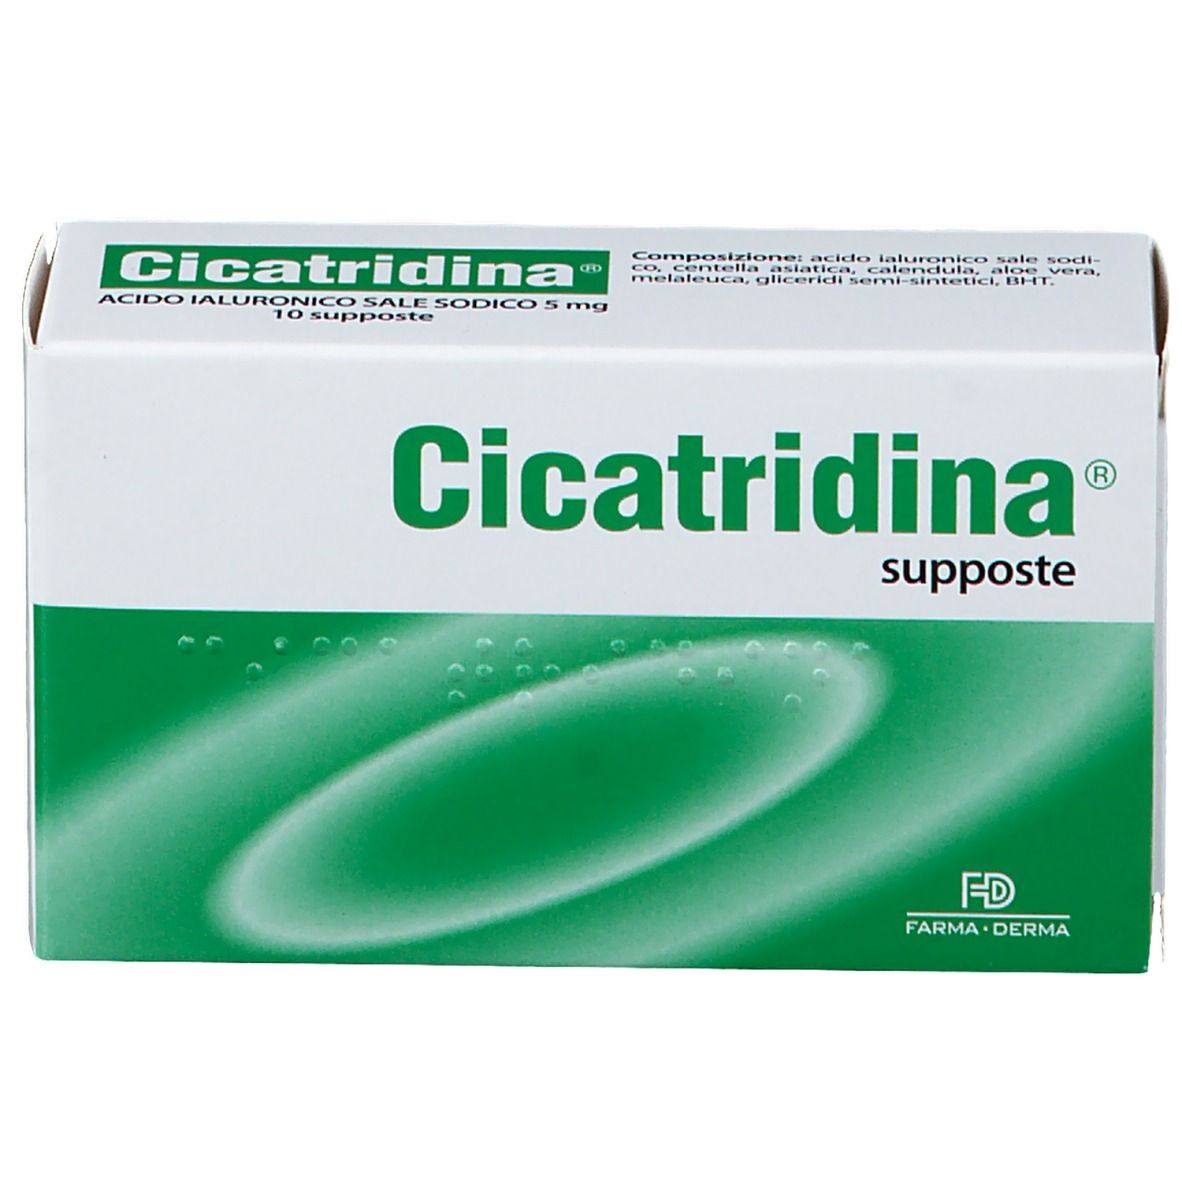 Cicatridina® Supposte